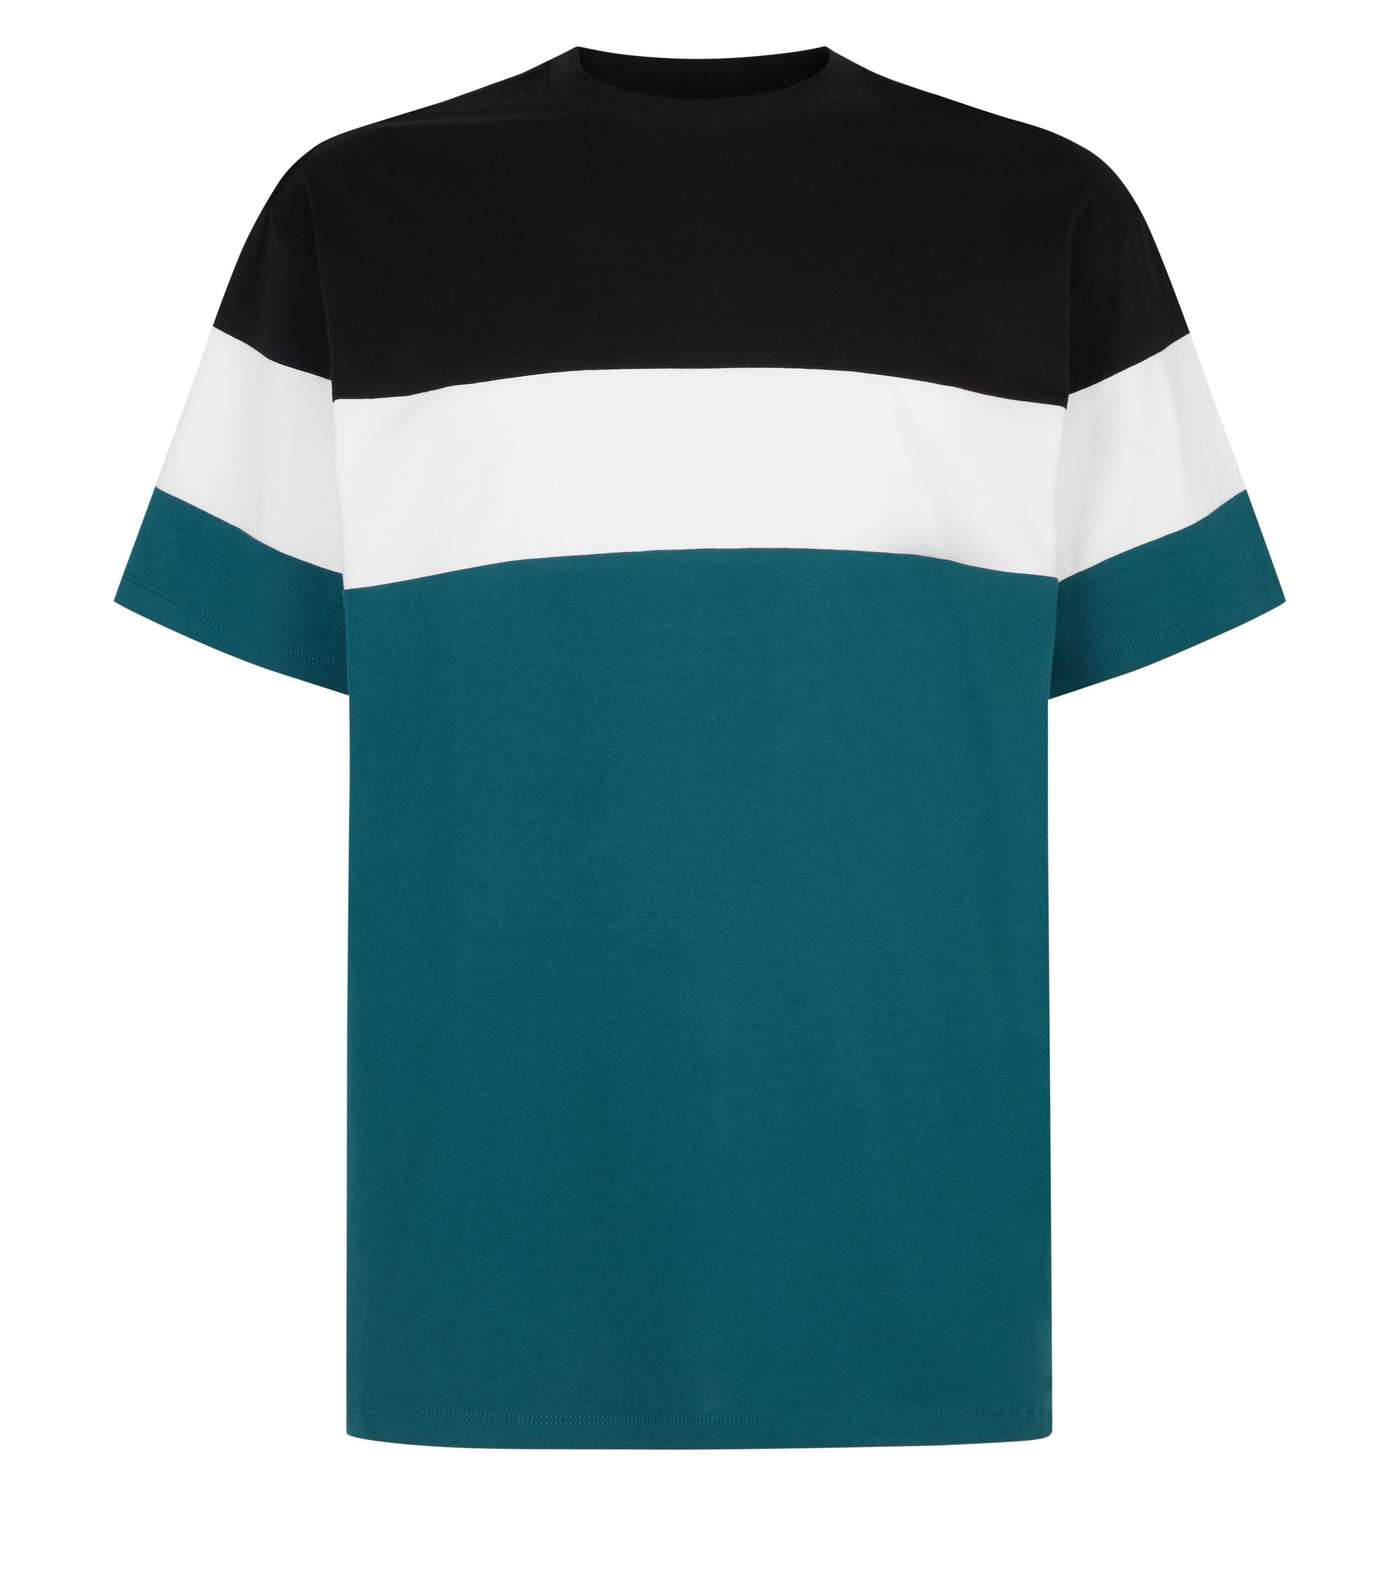 Teal Colour Block T-Shirt Image 4